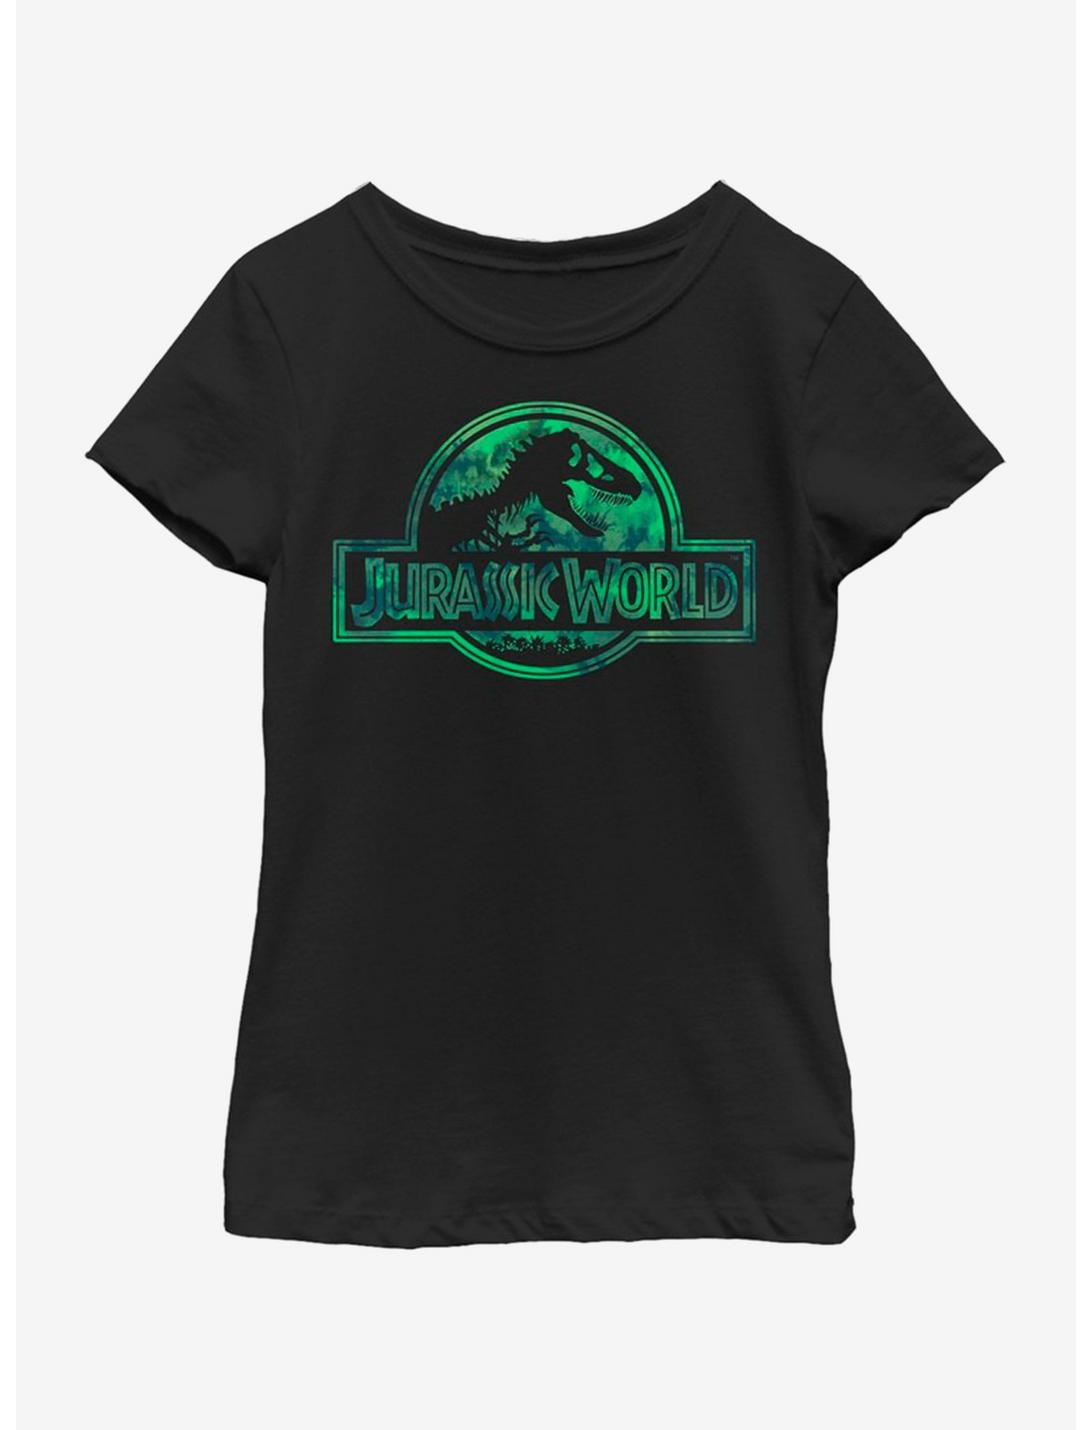 Jurassic World Forest Logo Youth Girls T-Shirt, BLACK, hi-res